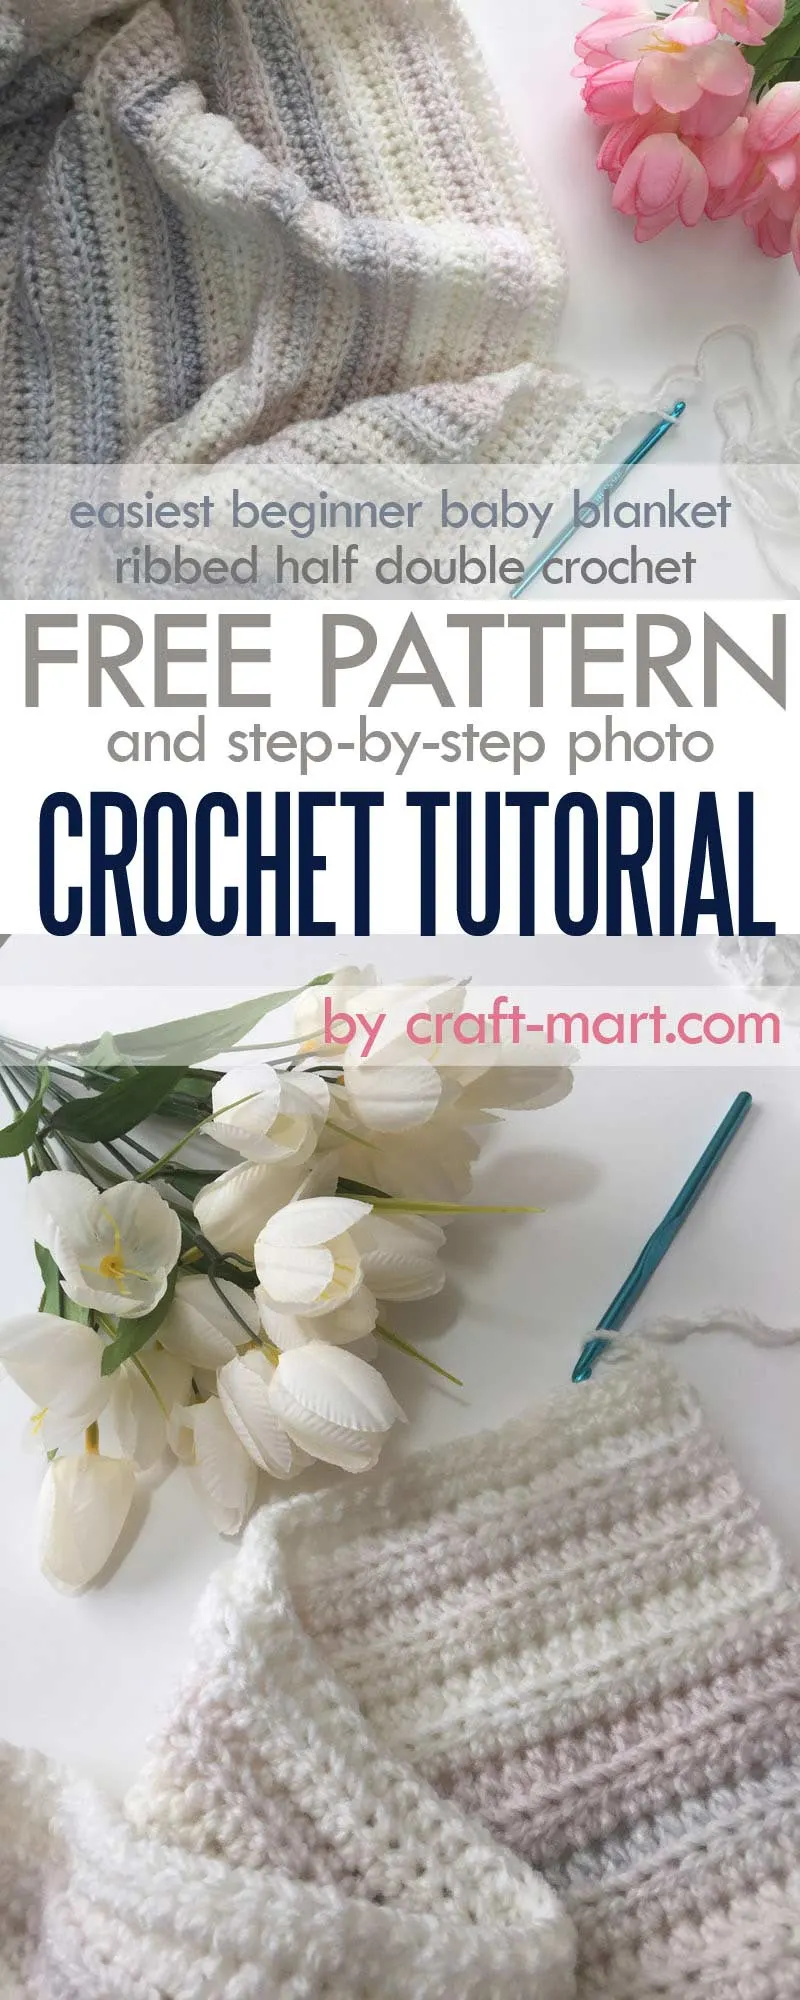 Ribbed half double crochet easiest beginner crochet baby blanket free pattern and step-by-step tutorial